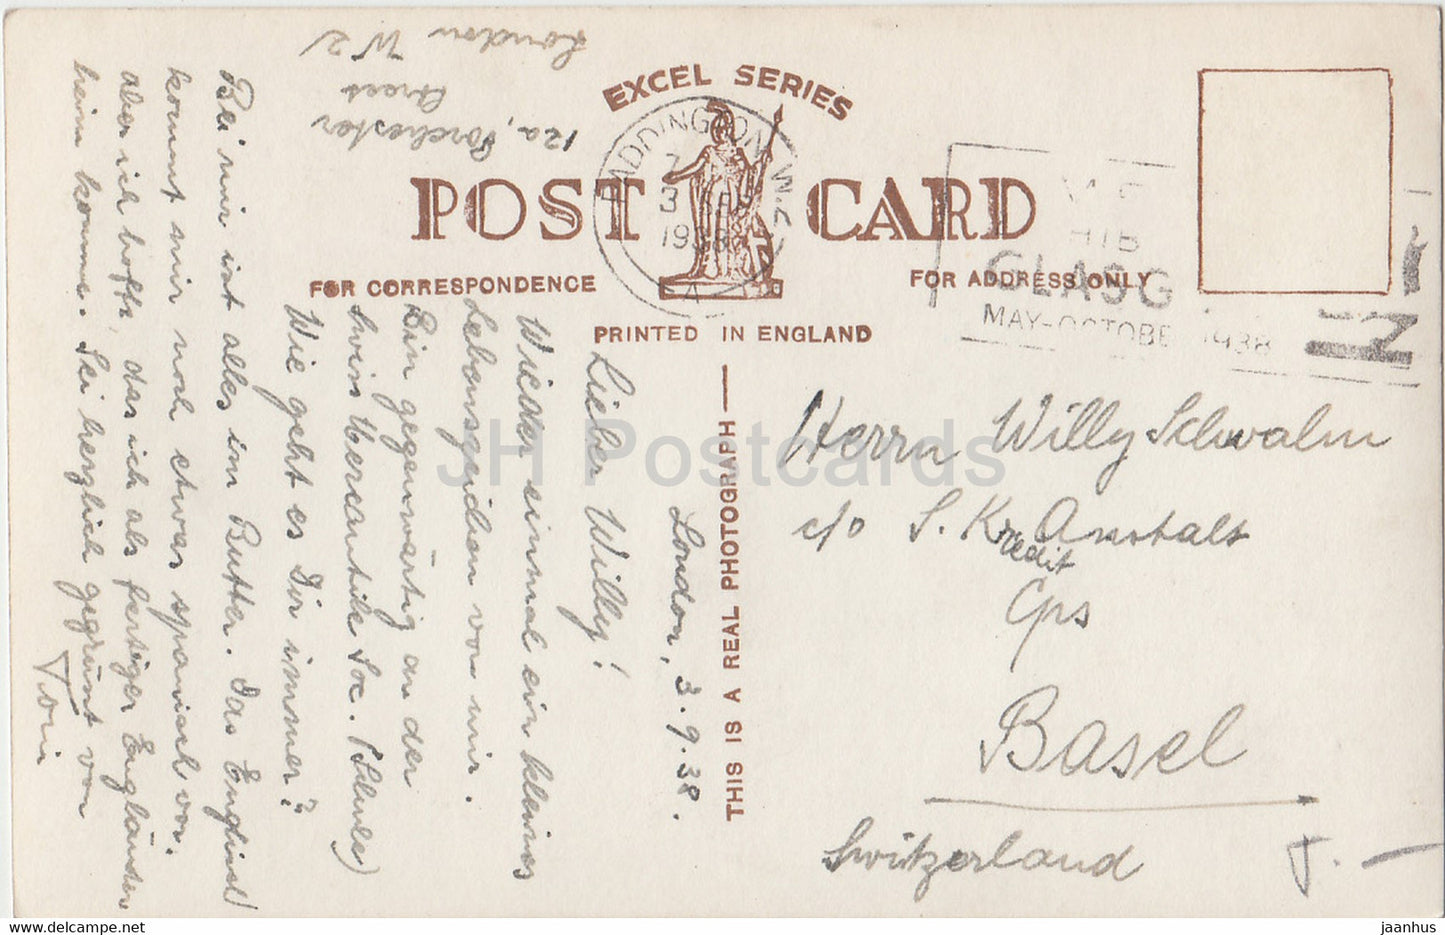 London - Thames Embankment - tram - car - Excel Series -127 - old postcard - 1938 - England - United Kingdom - used